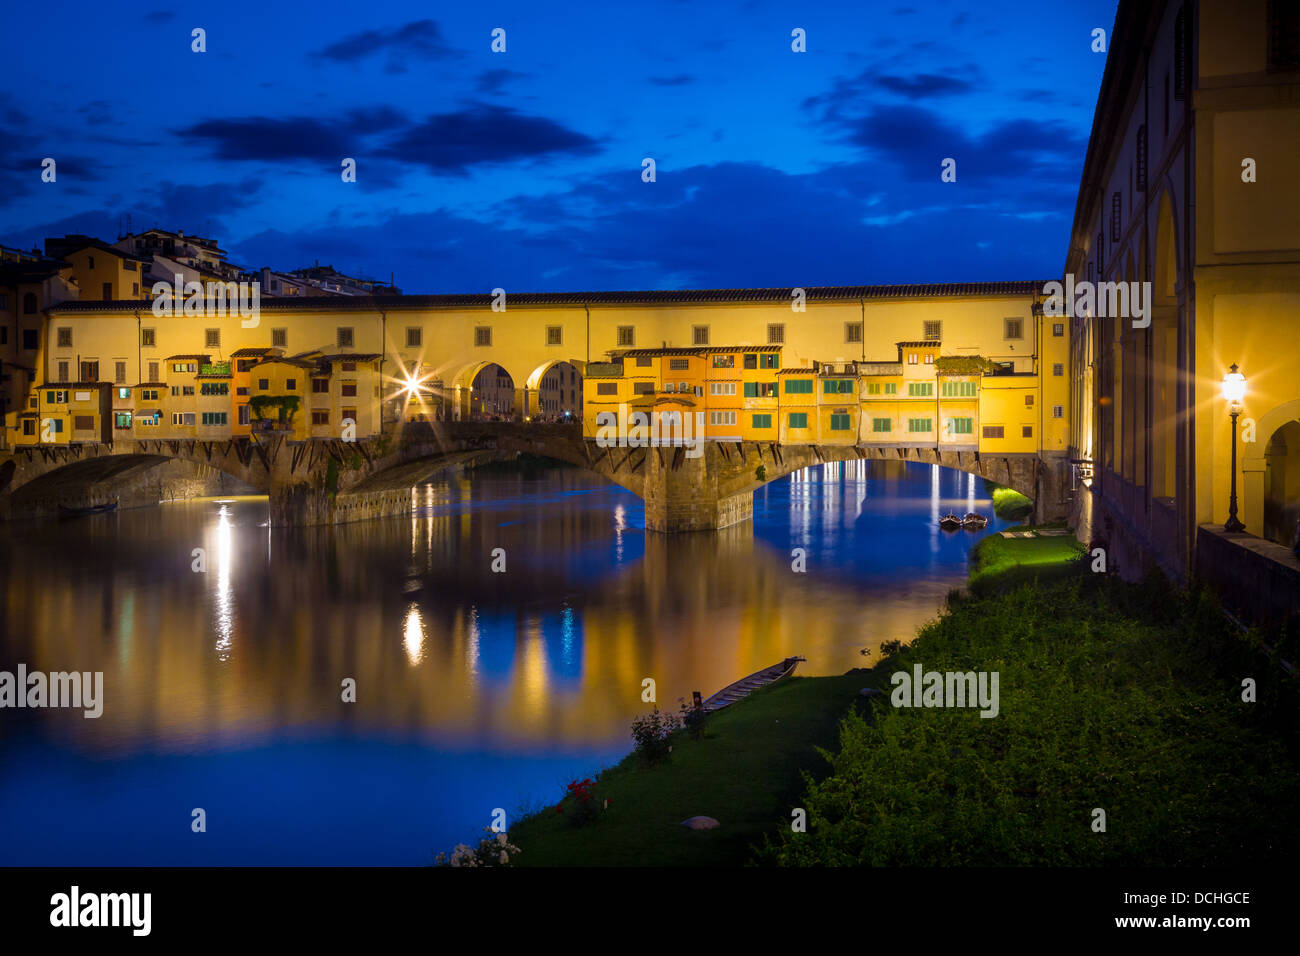 The river Arno and Ponte Vecchio bridge in Firenze (Florence), Italy. Stock Photo